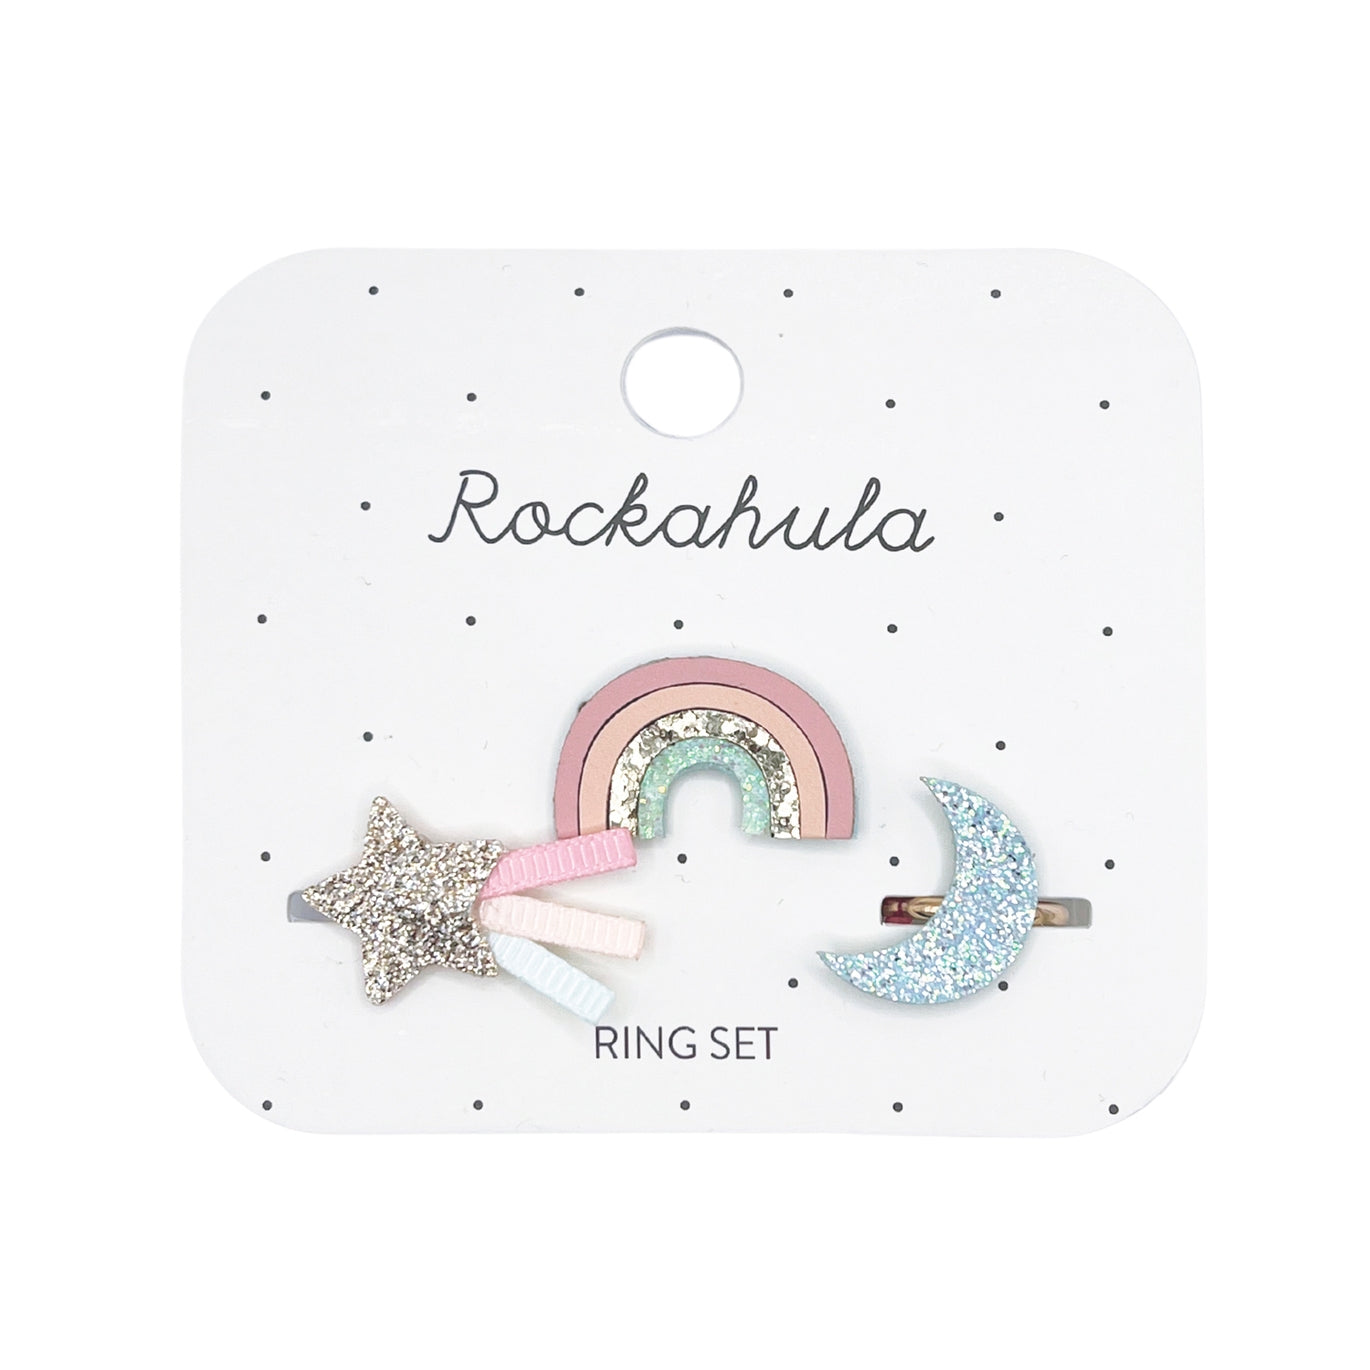 Rockahula rings set